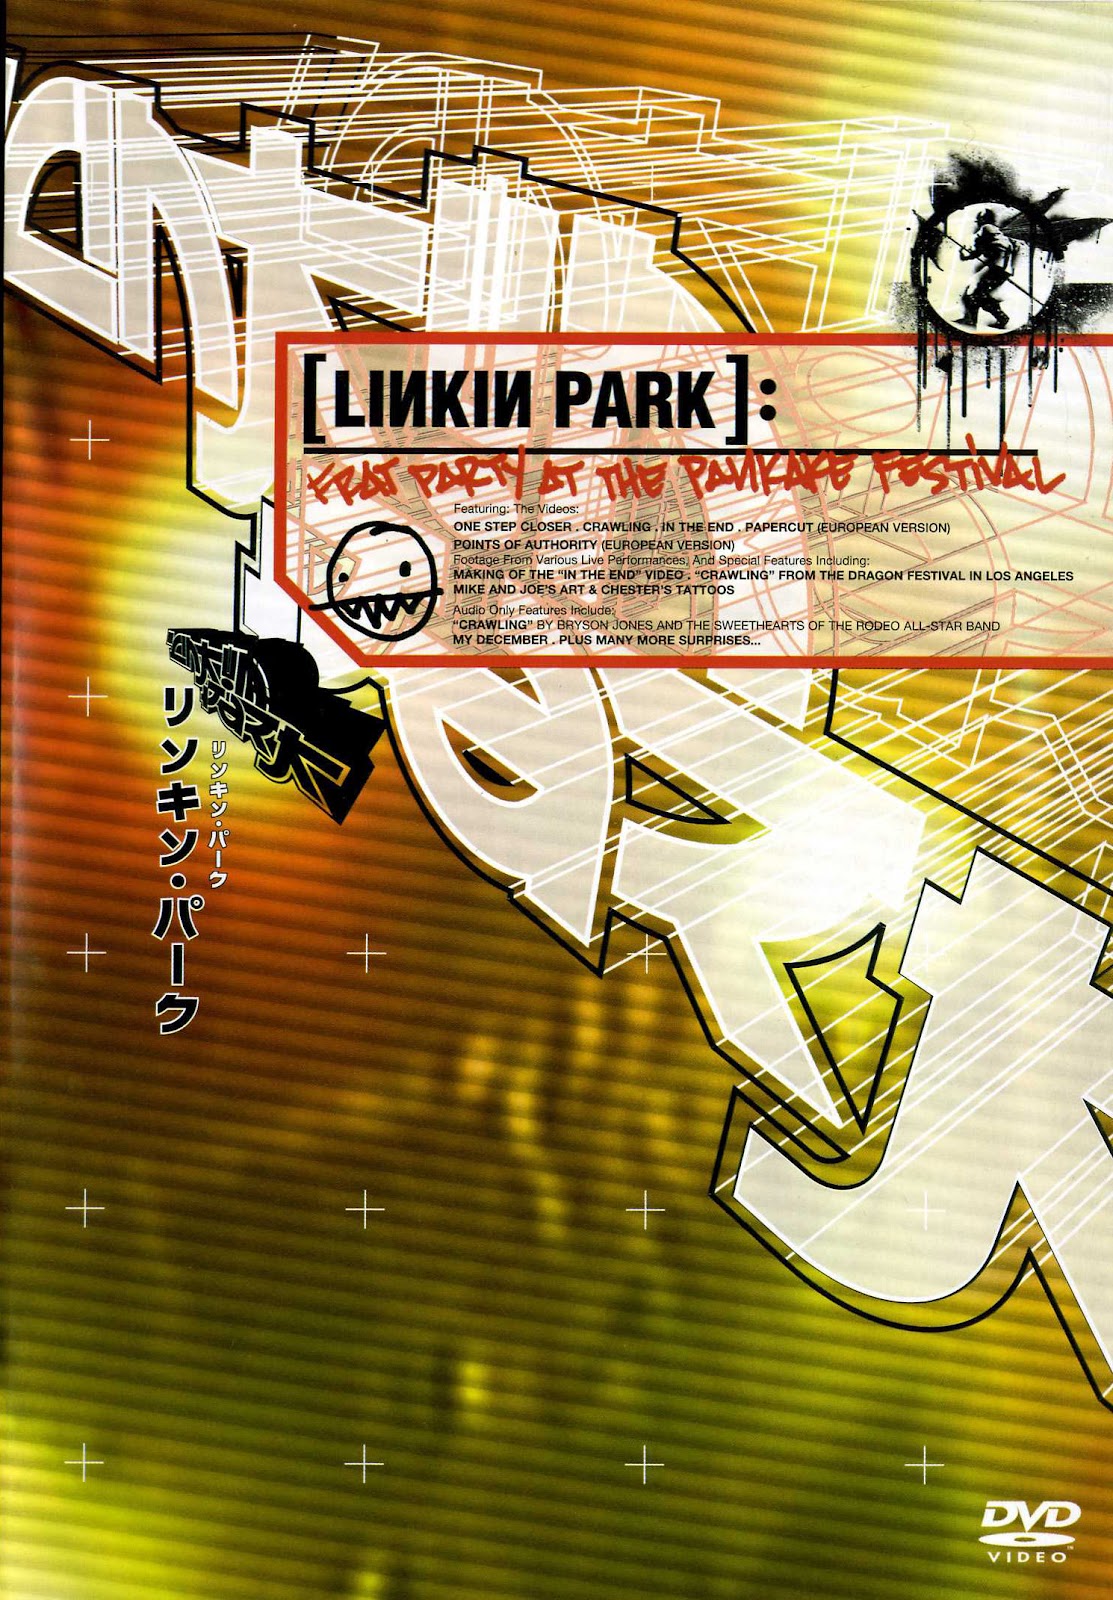 LINKIN PARK - FRAT PARTY AT THE PANKAKE FESTIVAL [DVD]